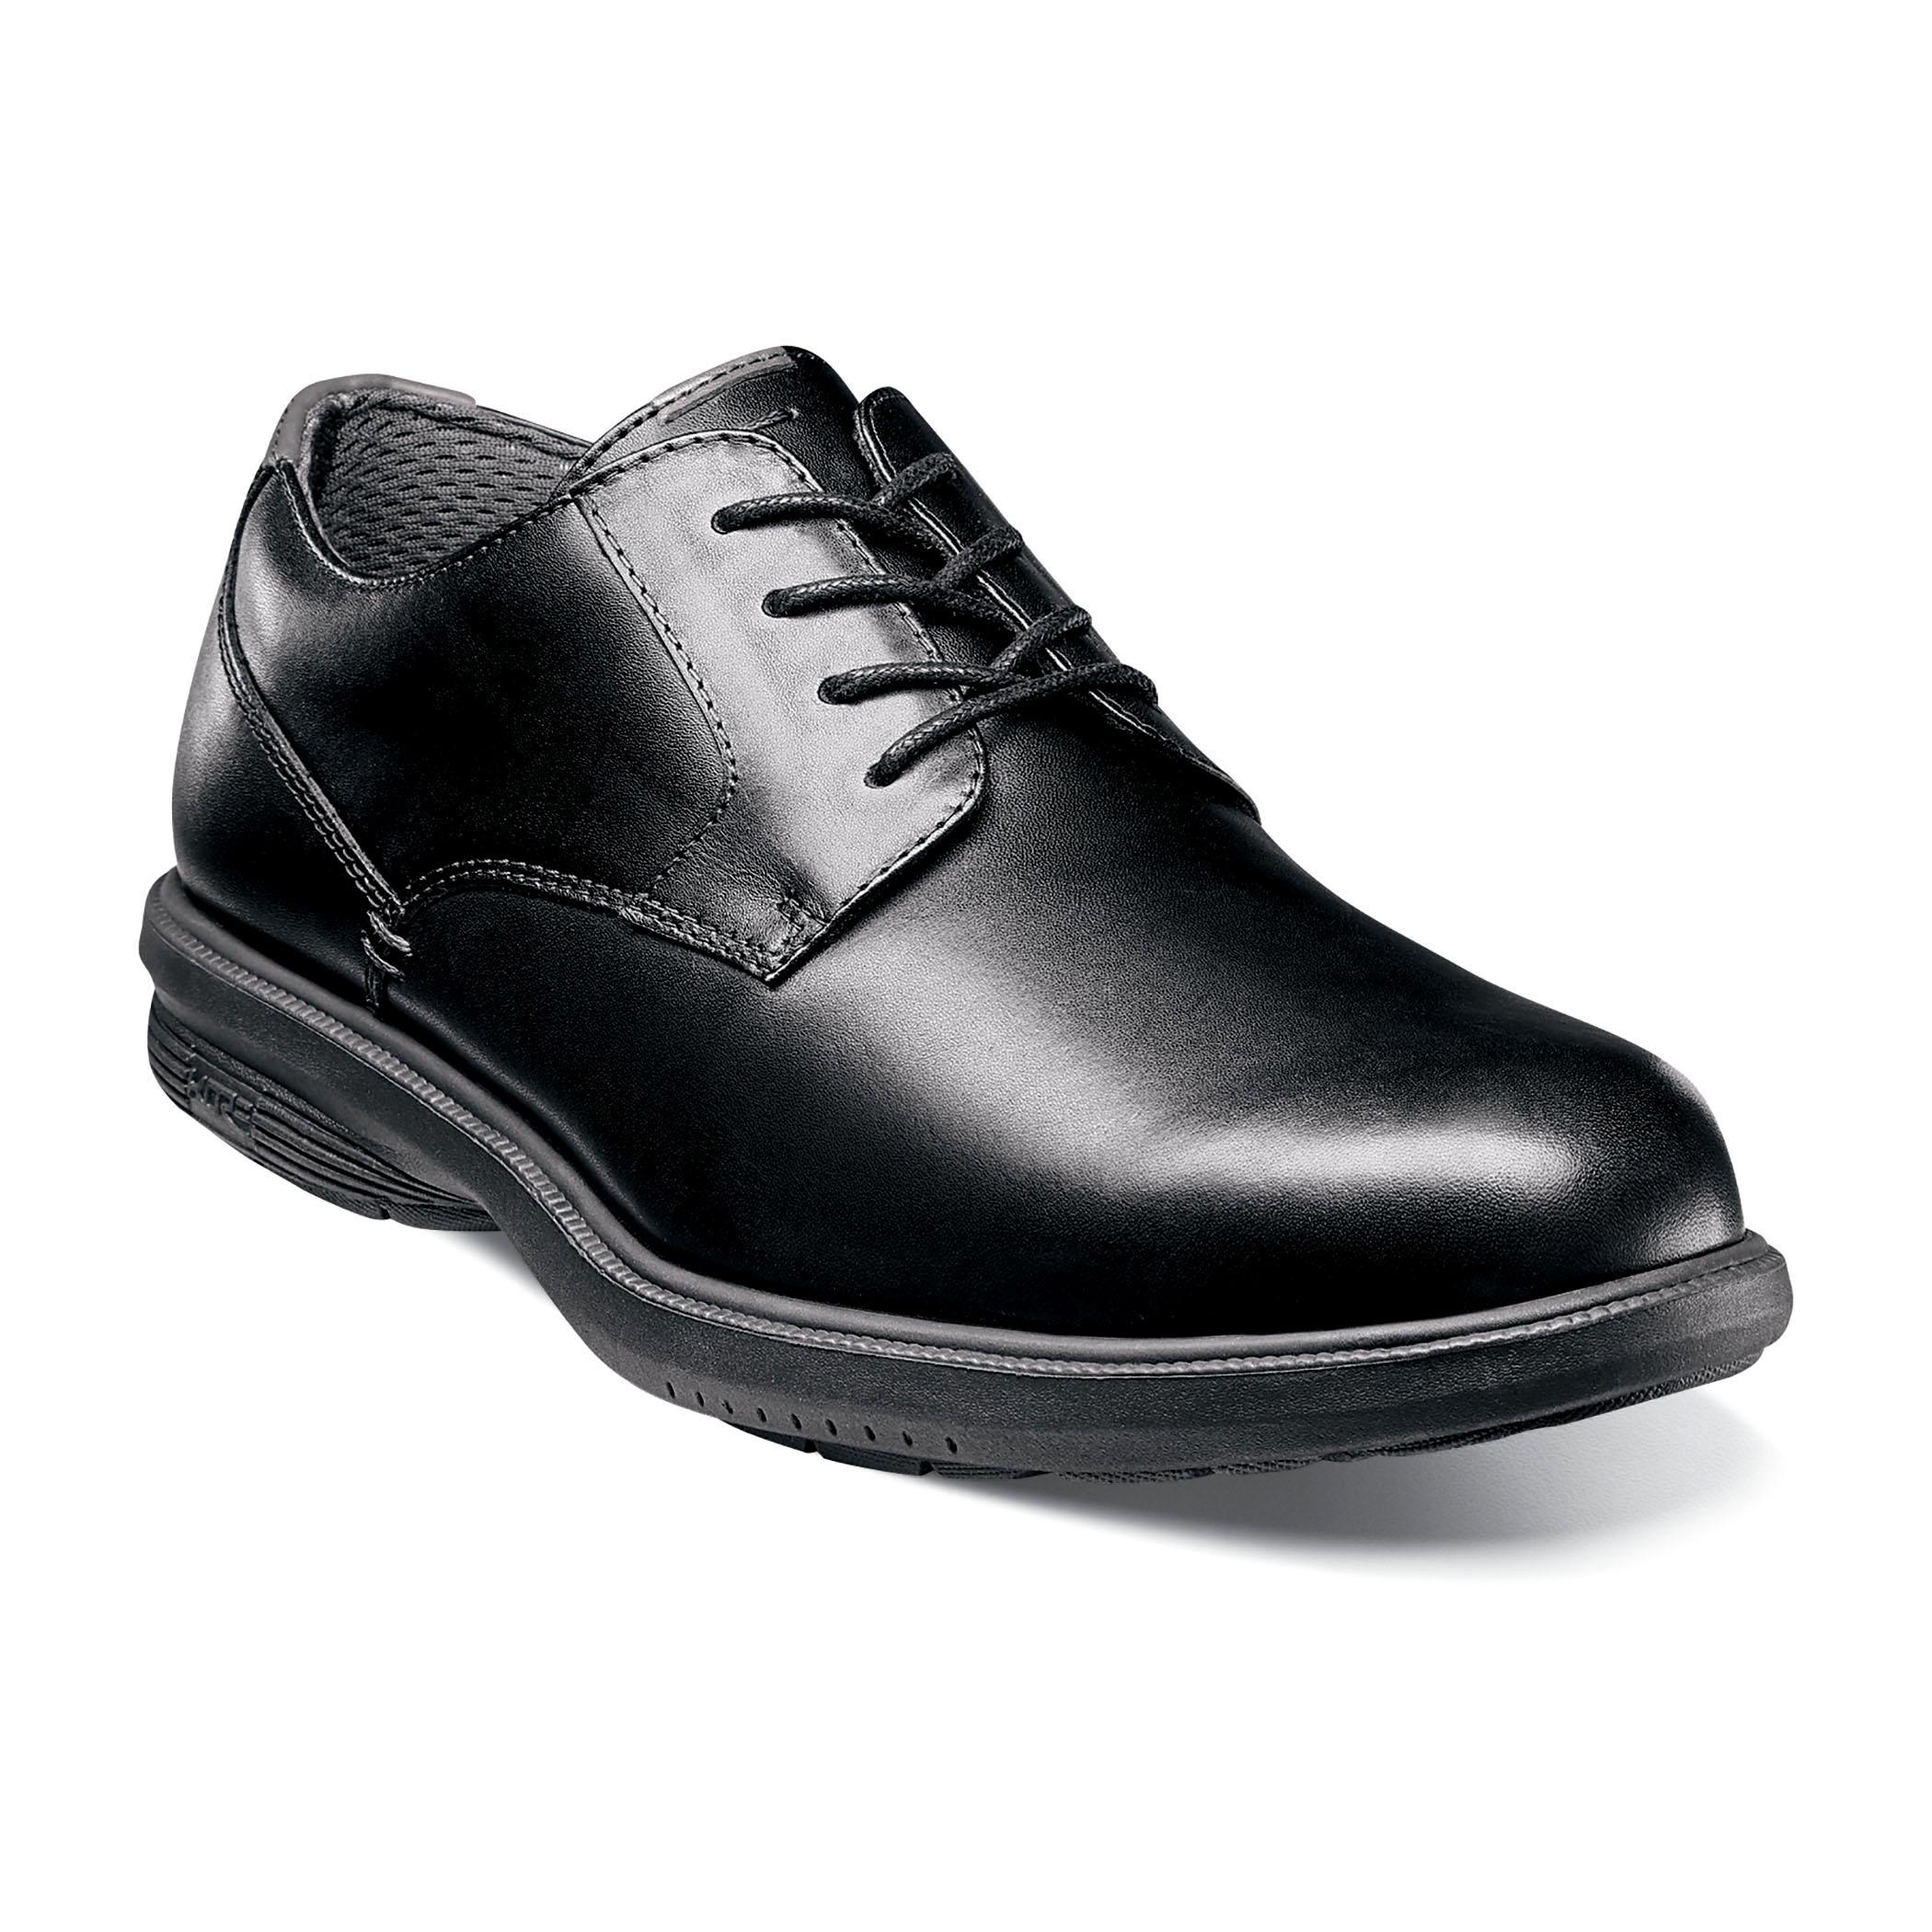 Nunn Bush Men's Marvin Street Oxford Dress Shoe - Black